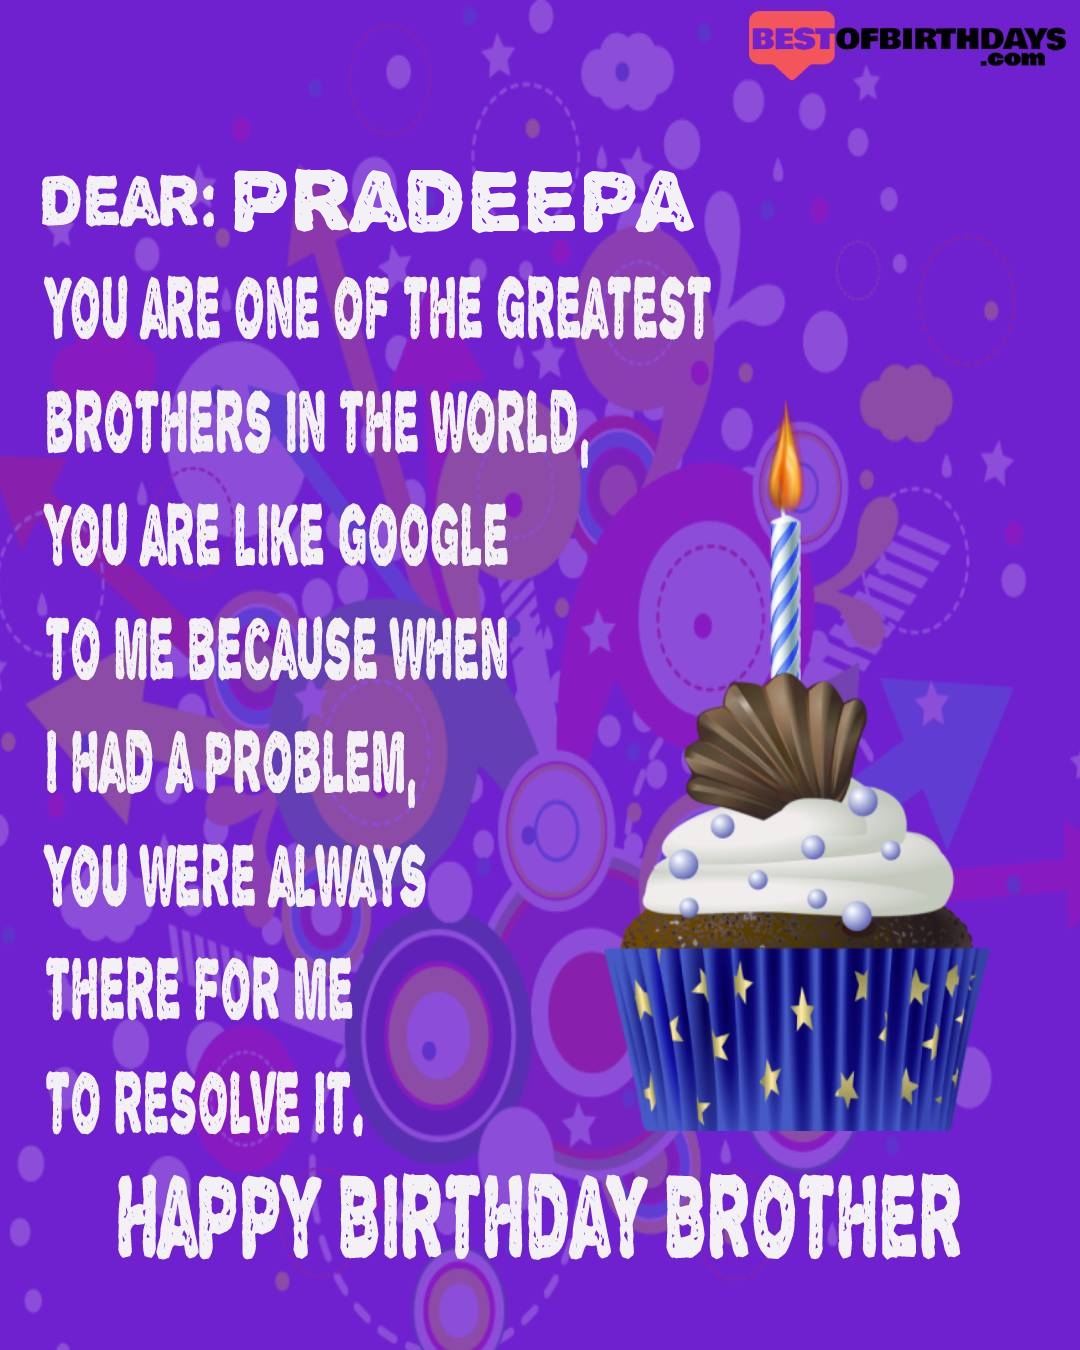 Happy birthday pradeepa bhai brother bro